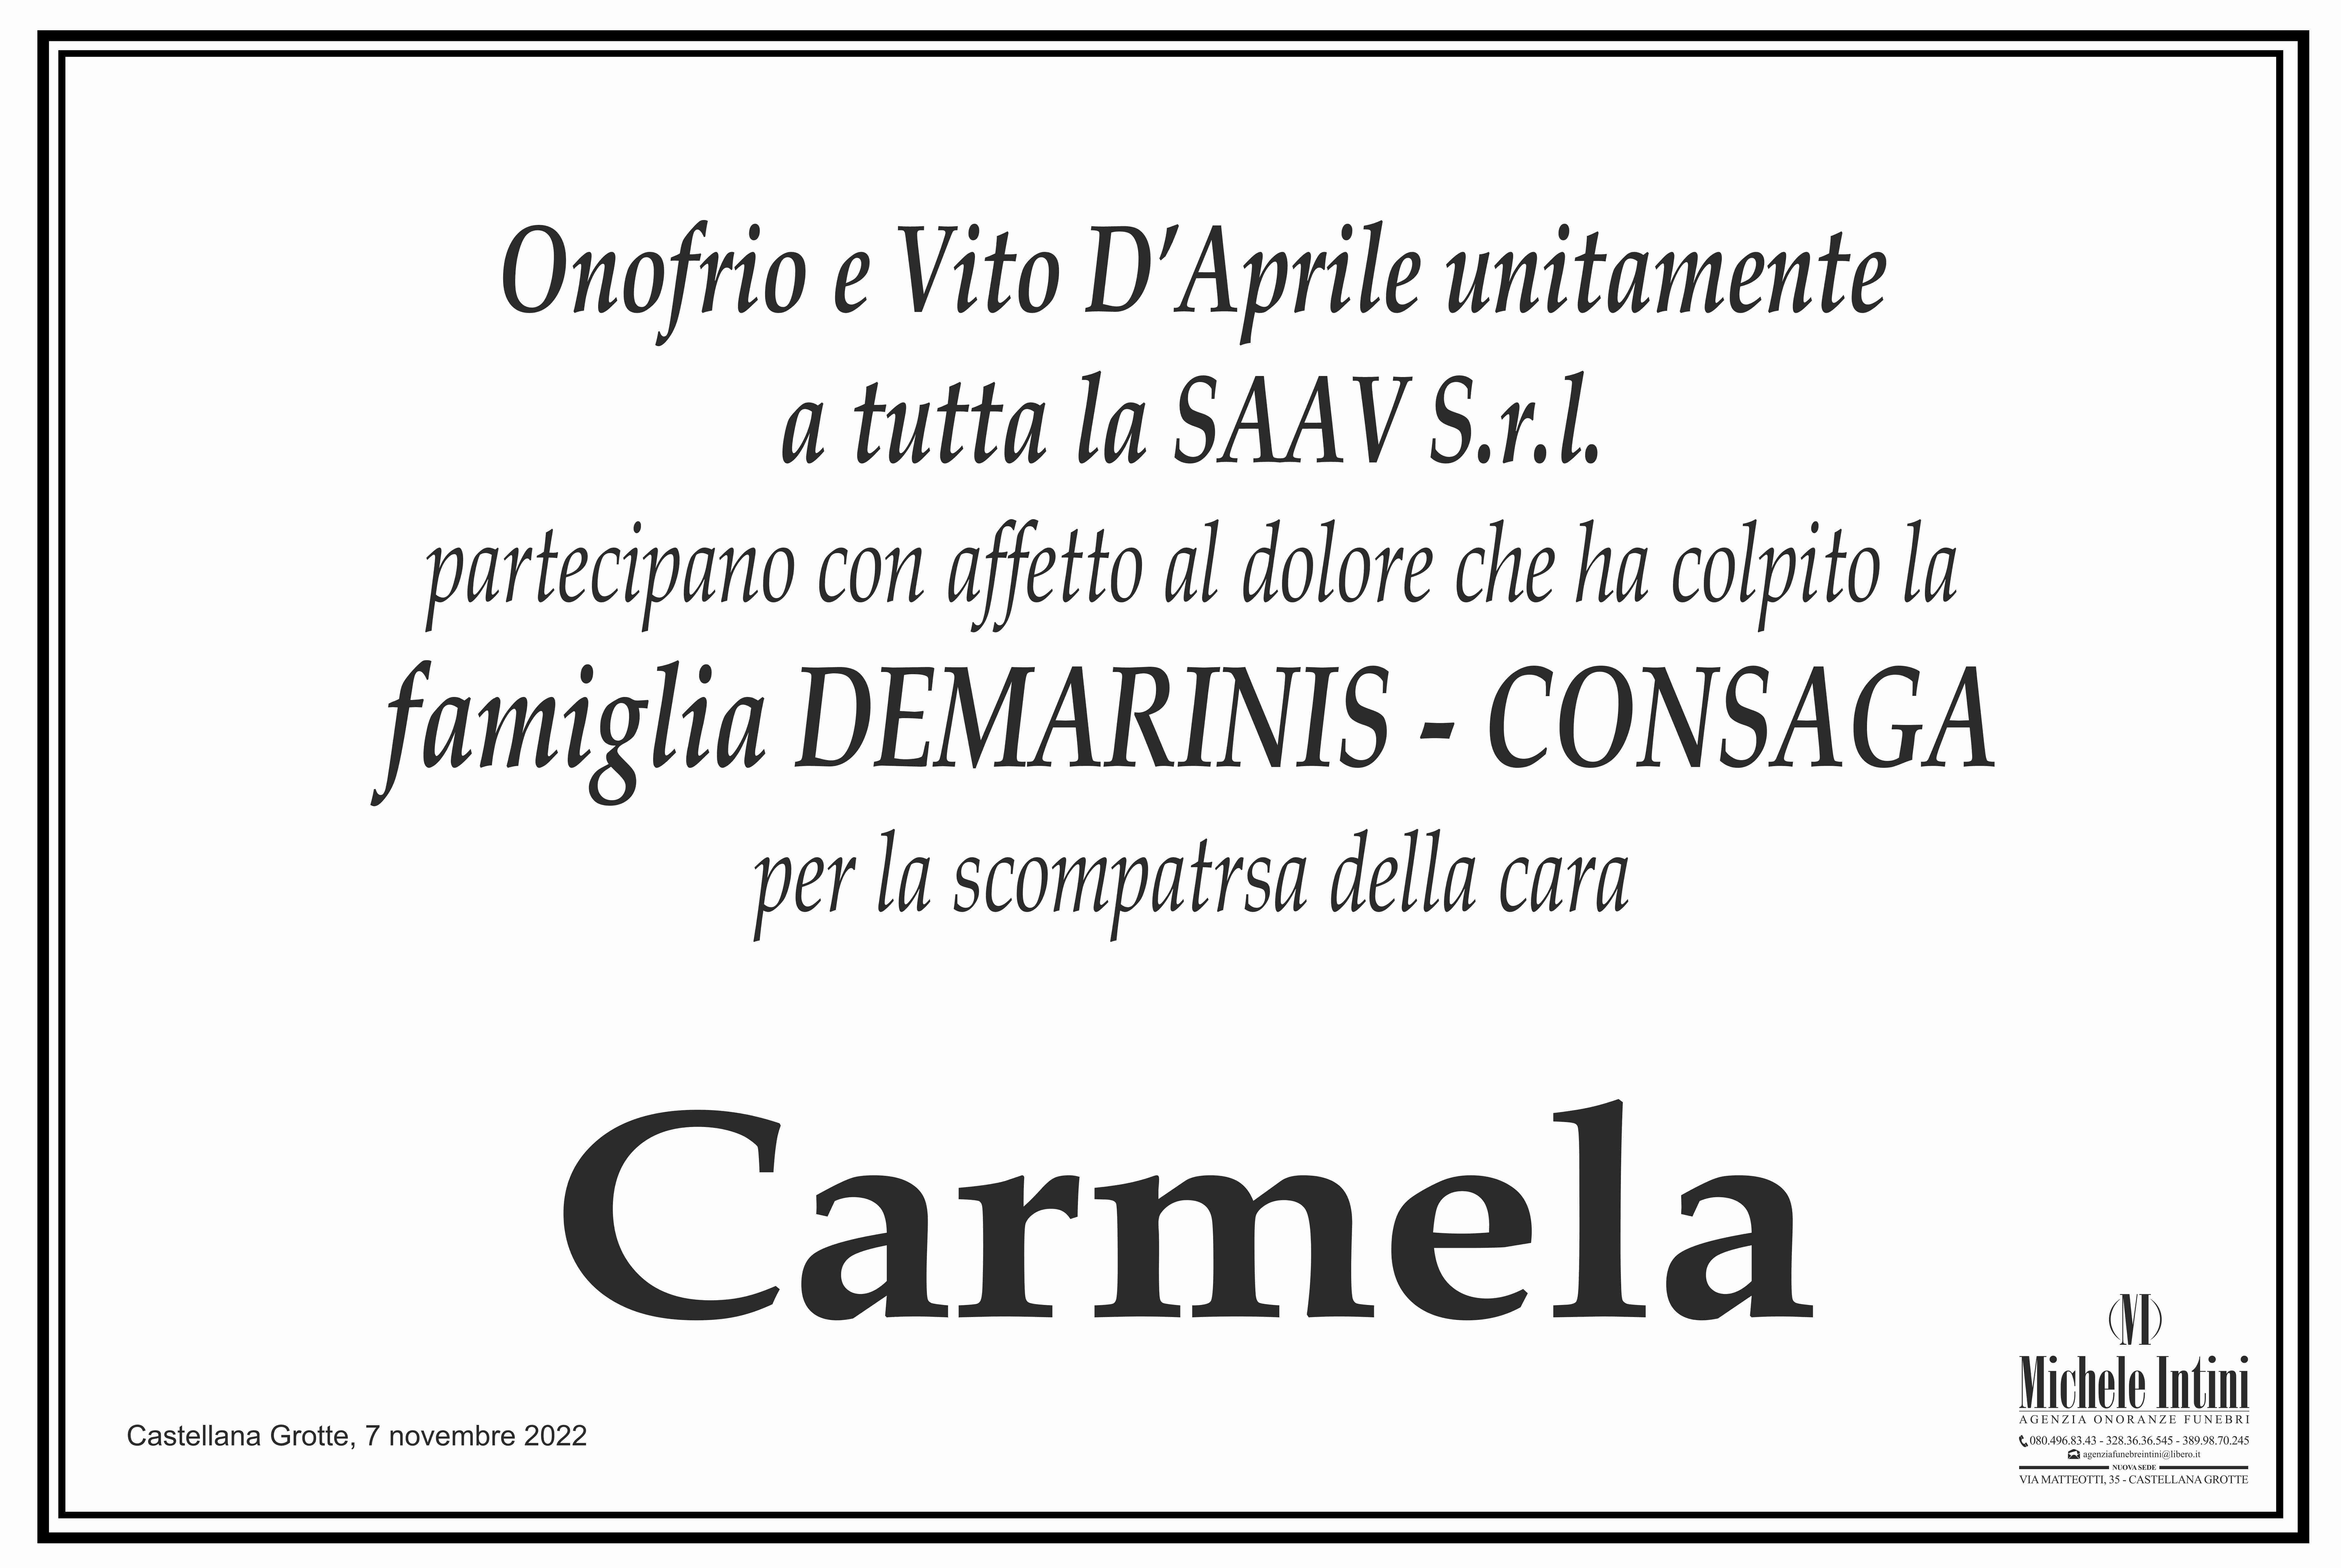 Carmela Consaga